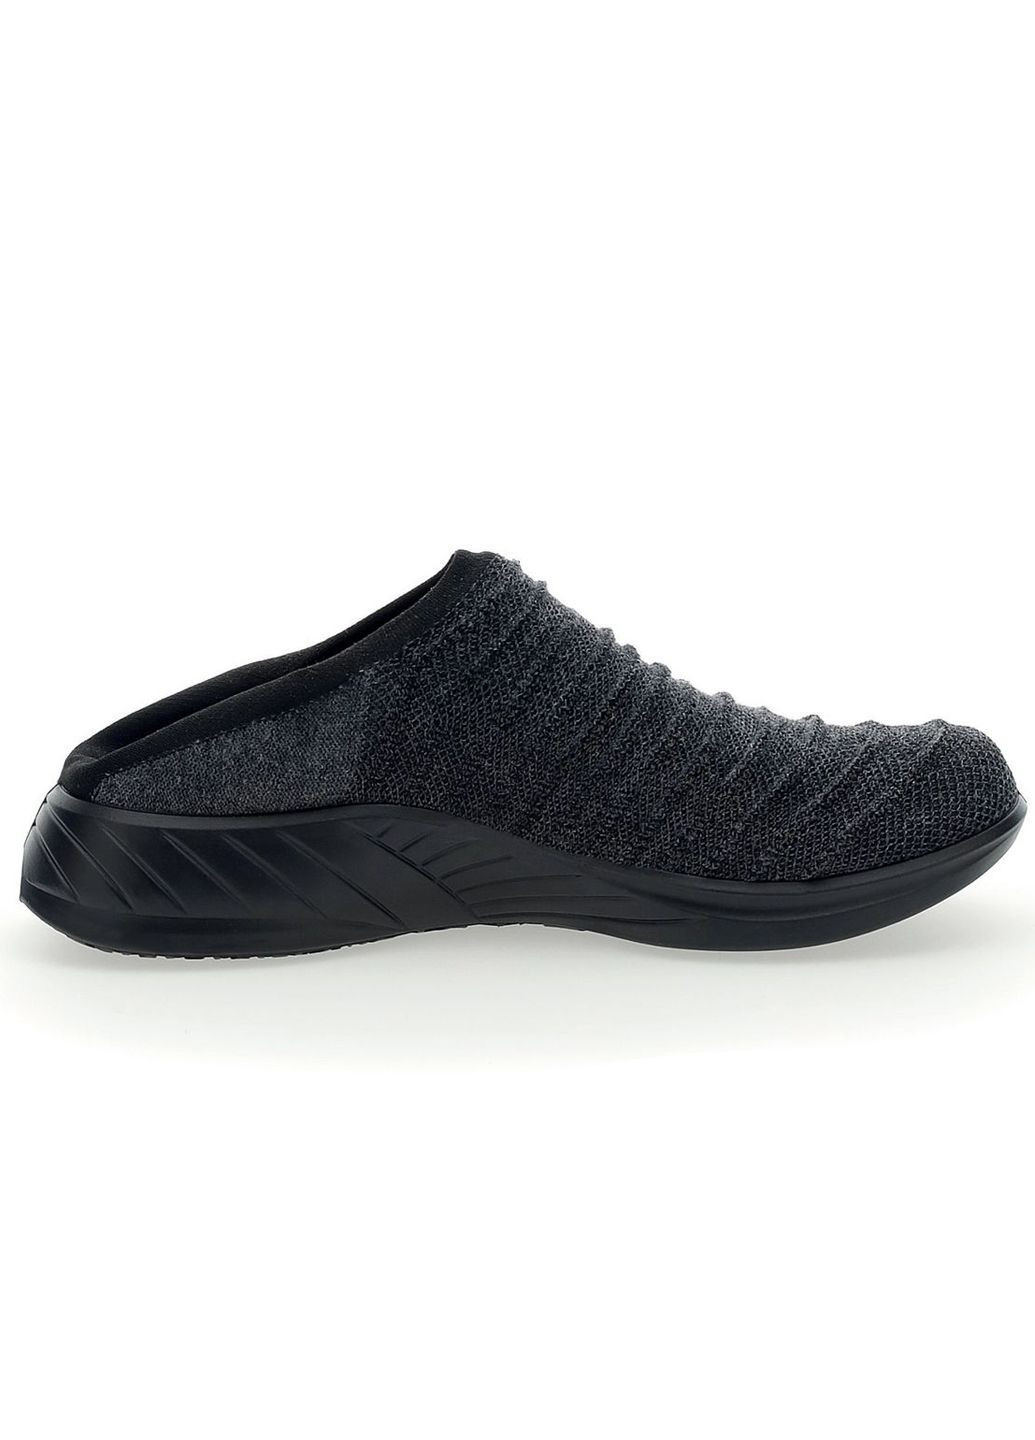 Цветные кроссовки женские UYN 3D RIBS SABOT WOOL Black Sole G618 Anthracite/Melange/Black